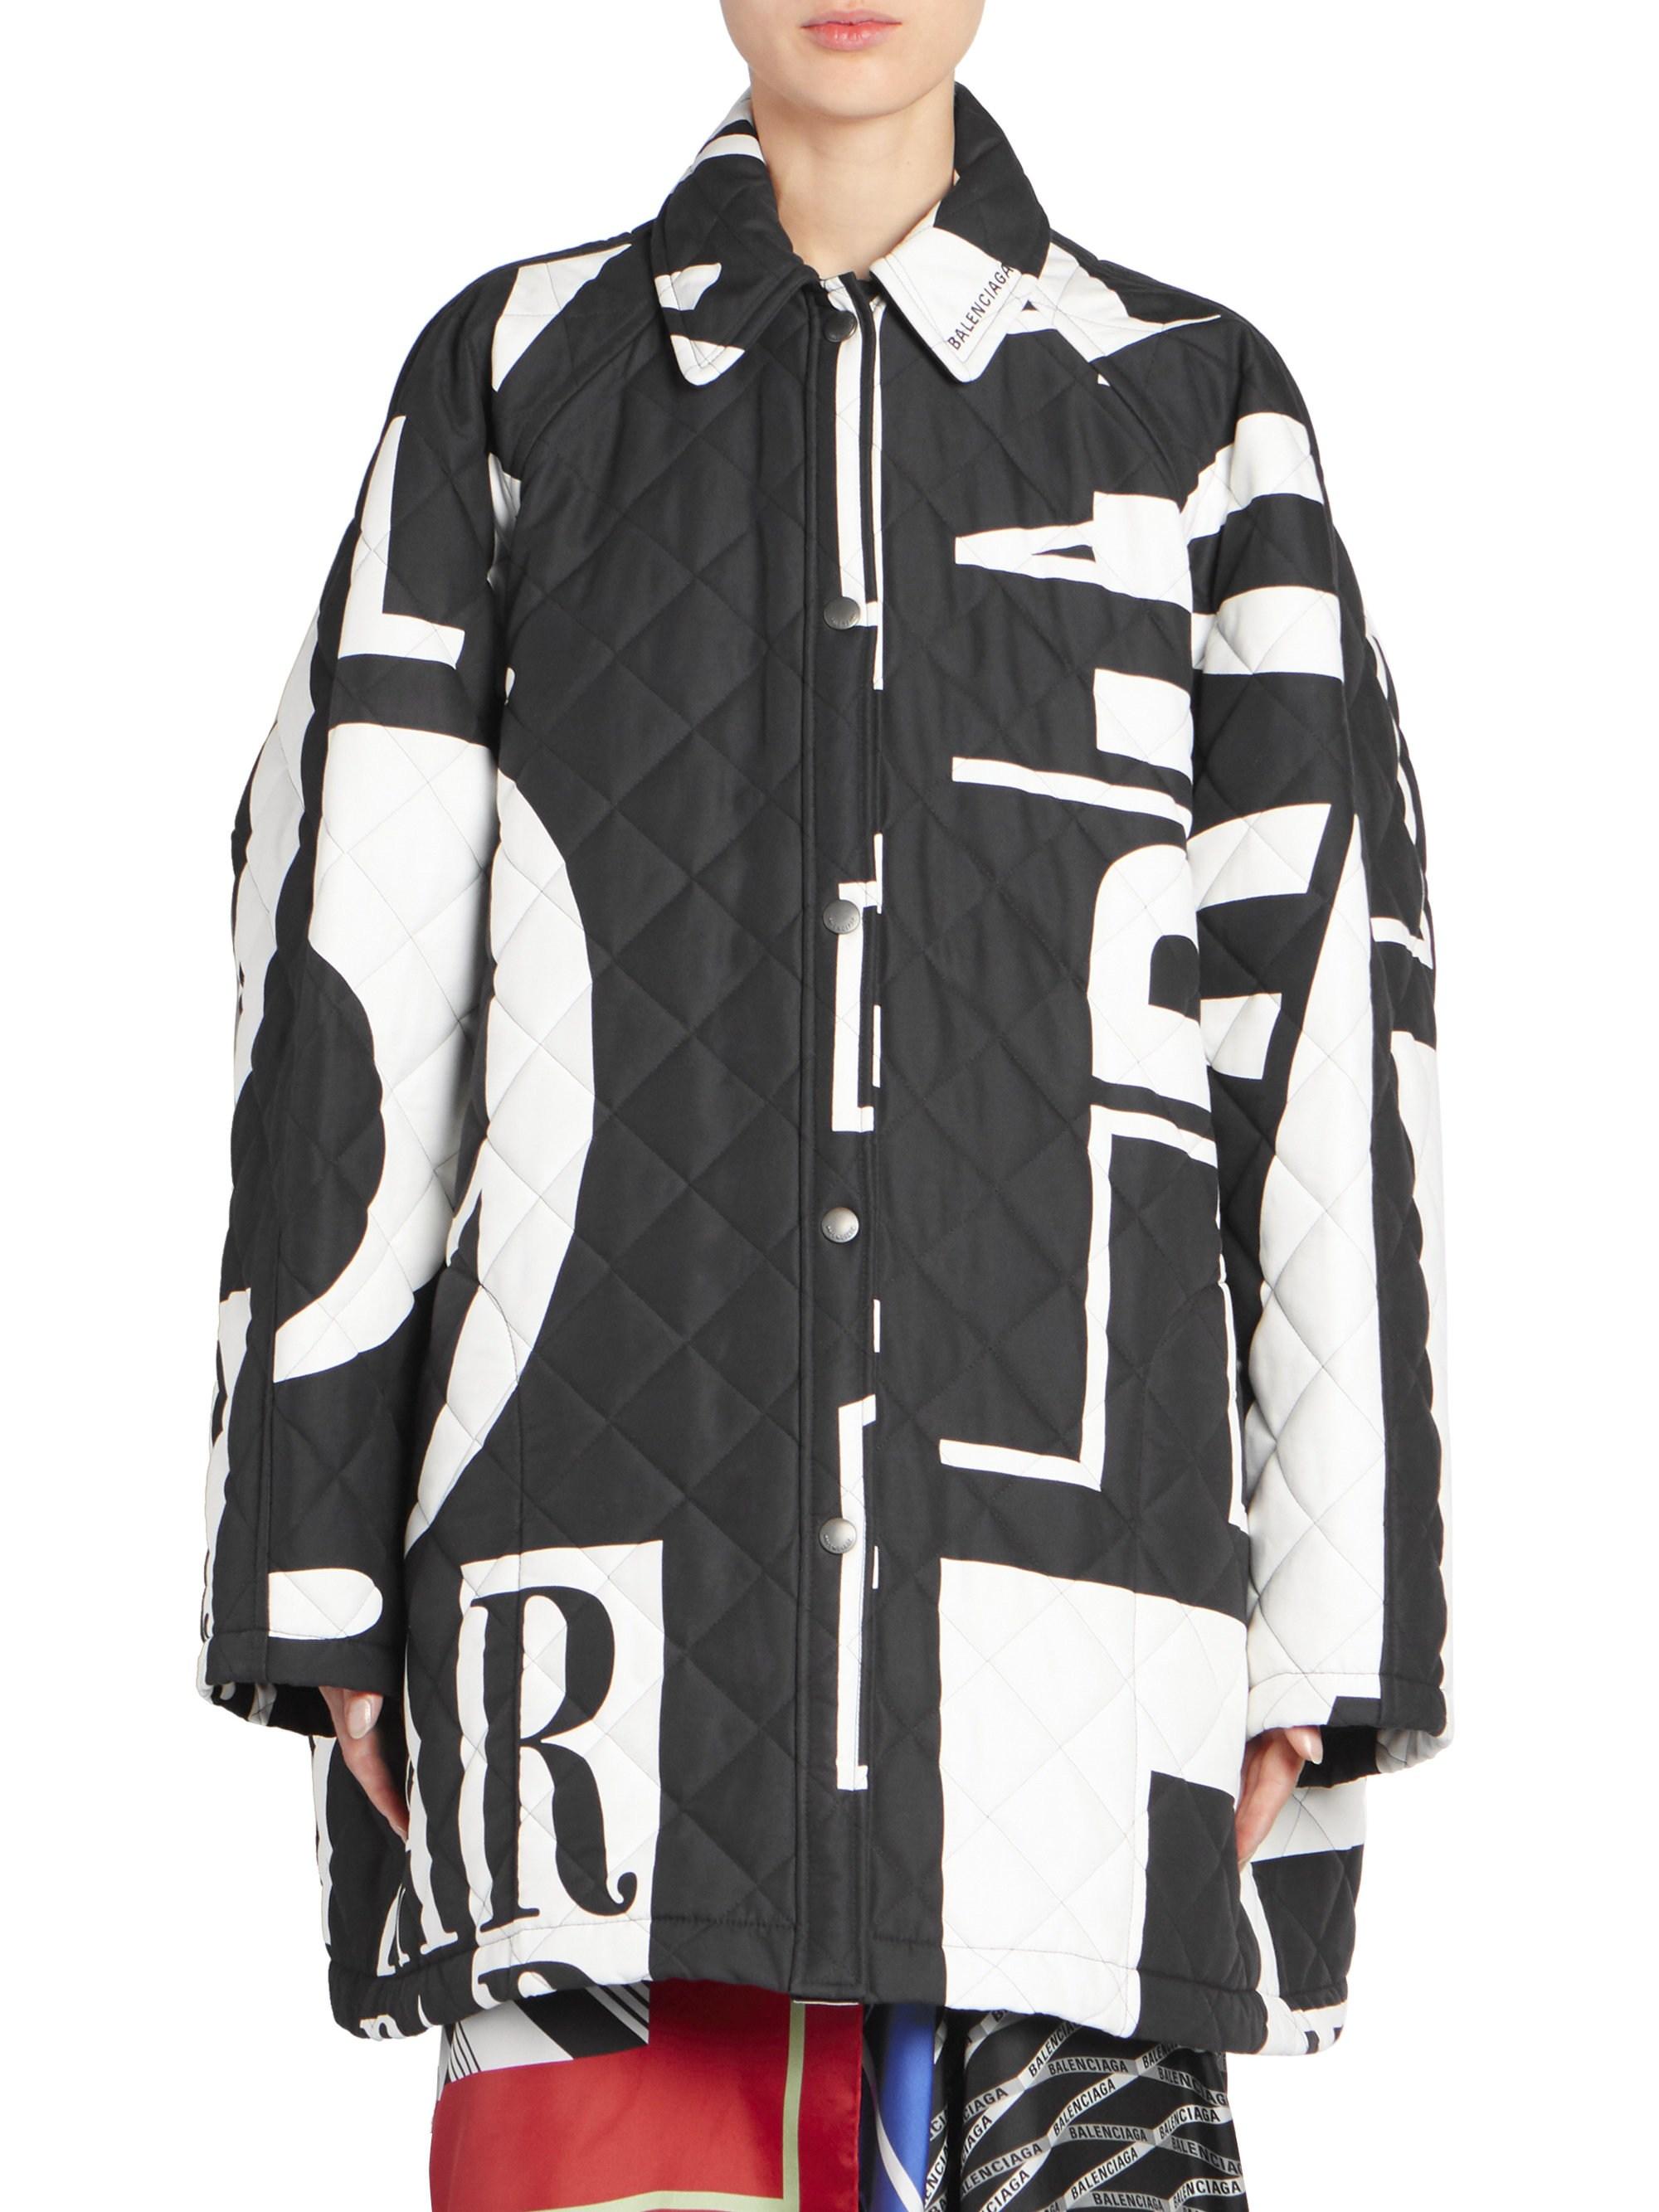 Balenciaga Cotton Big Typo Quilted Jacket in Black - Lyst